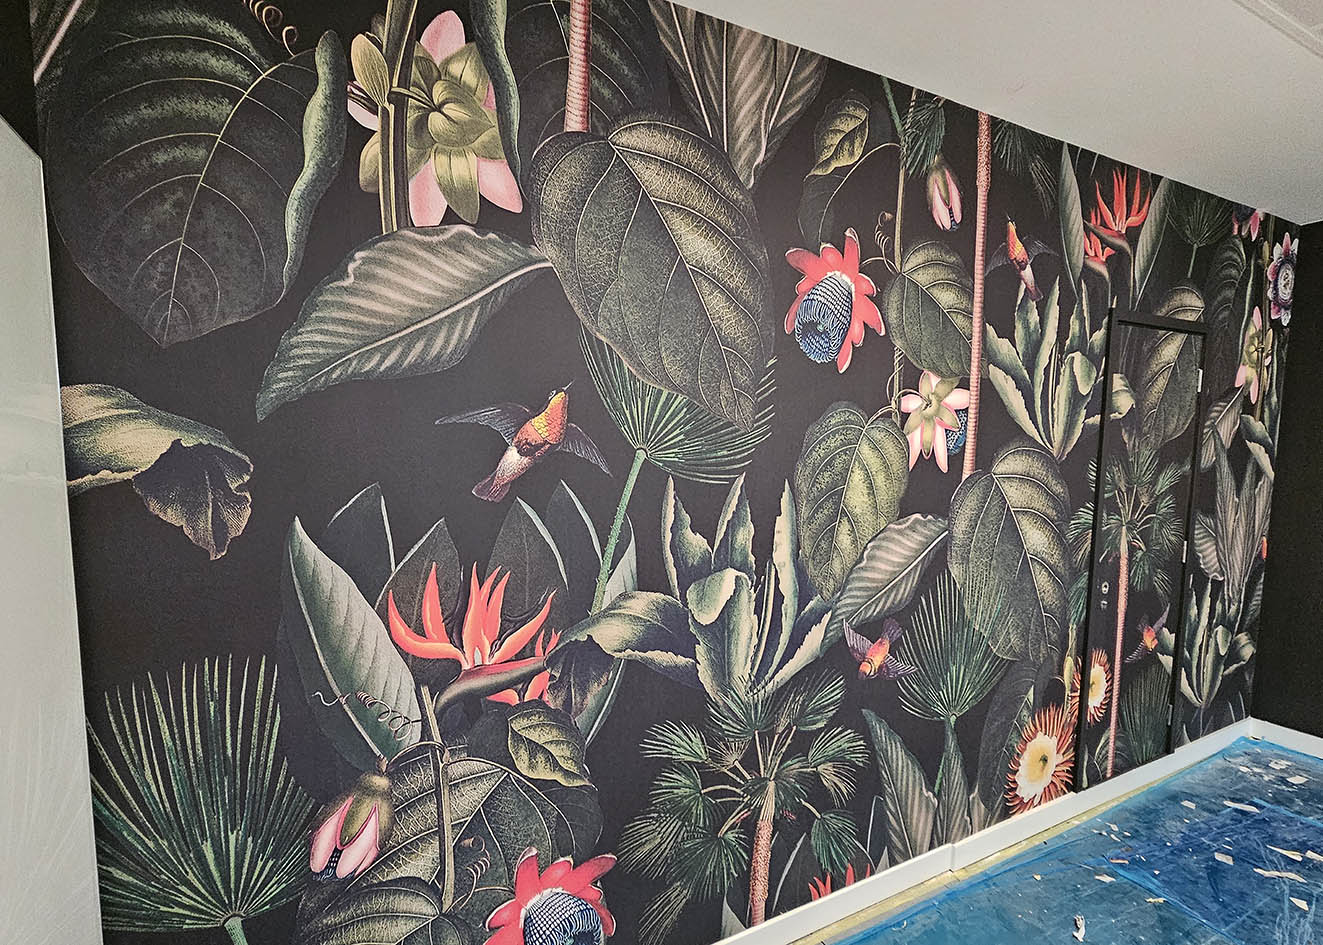 Wallpaper installation of botanical wallpaper mural in office.